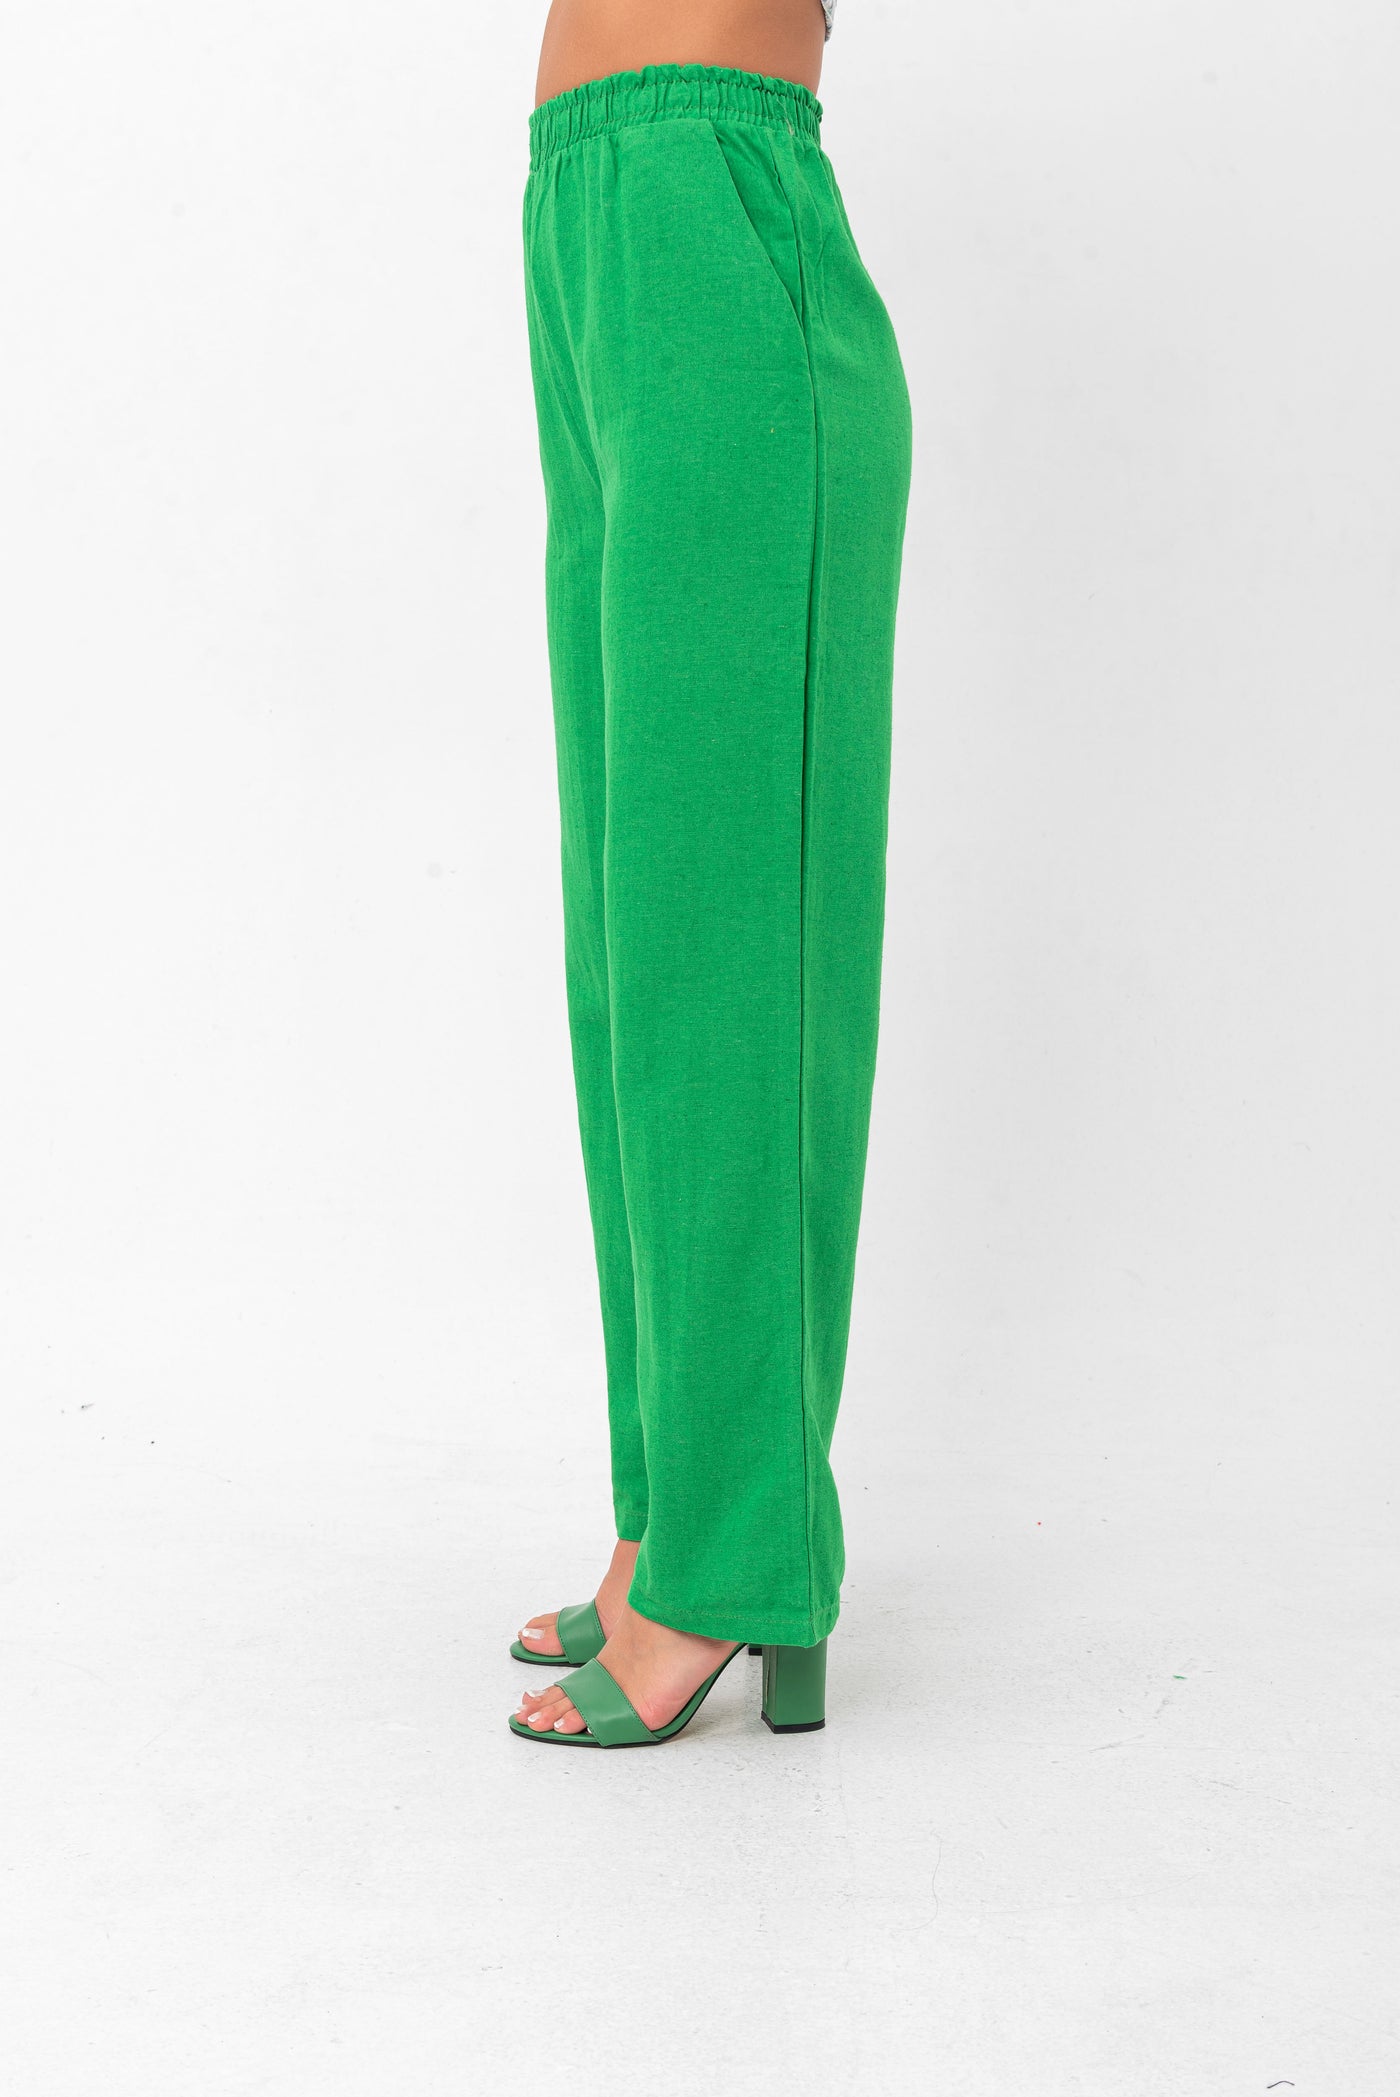 Roxy Casual Lounge Pants - Green